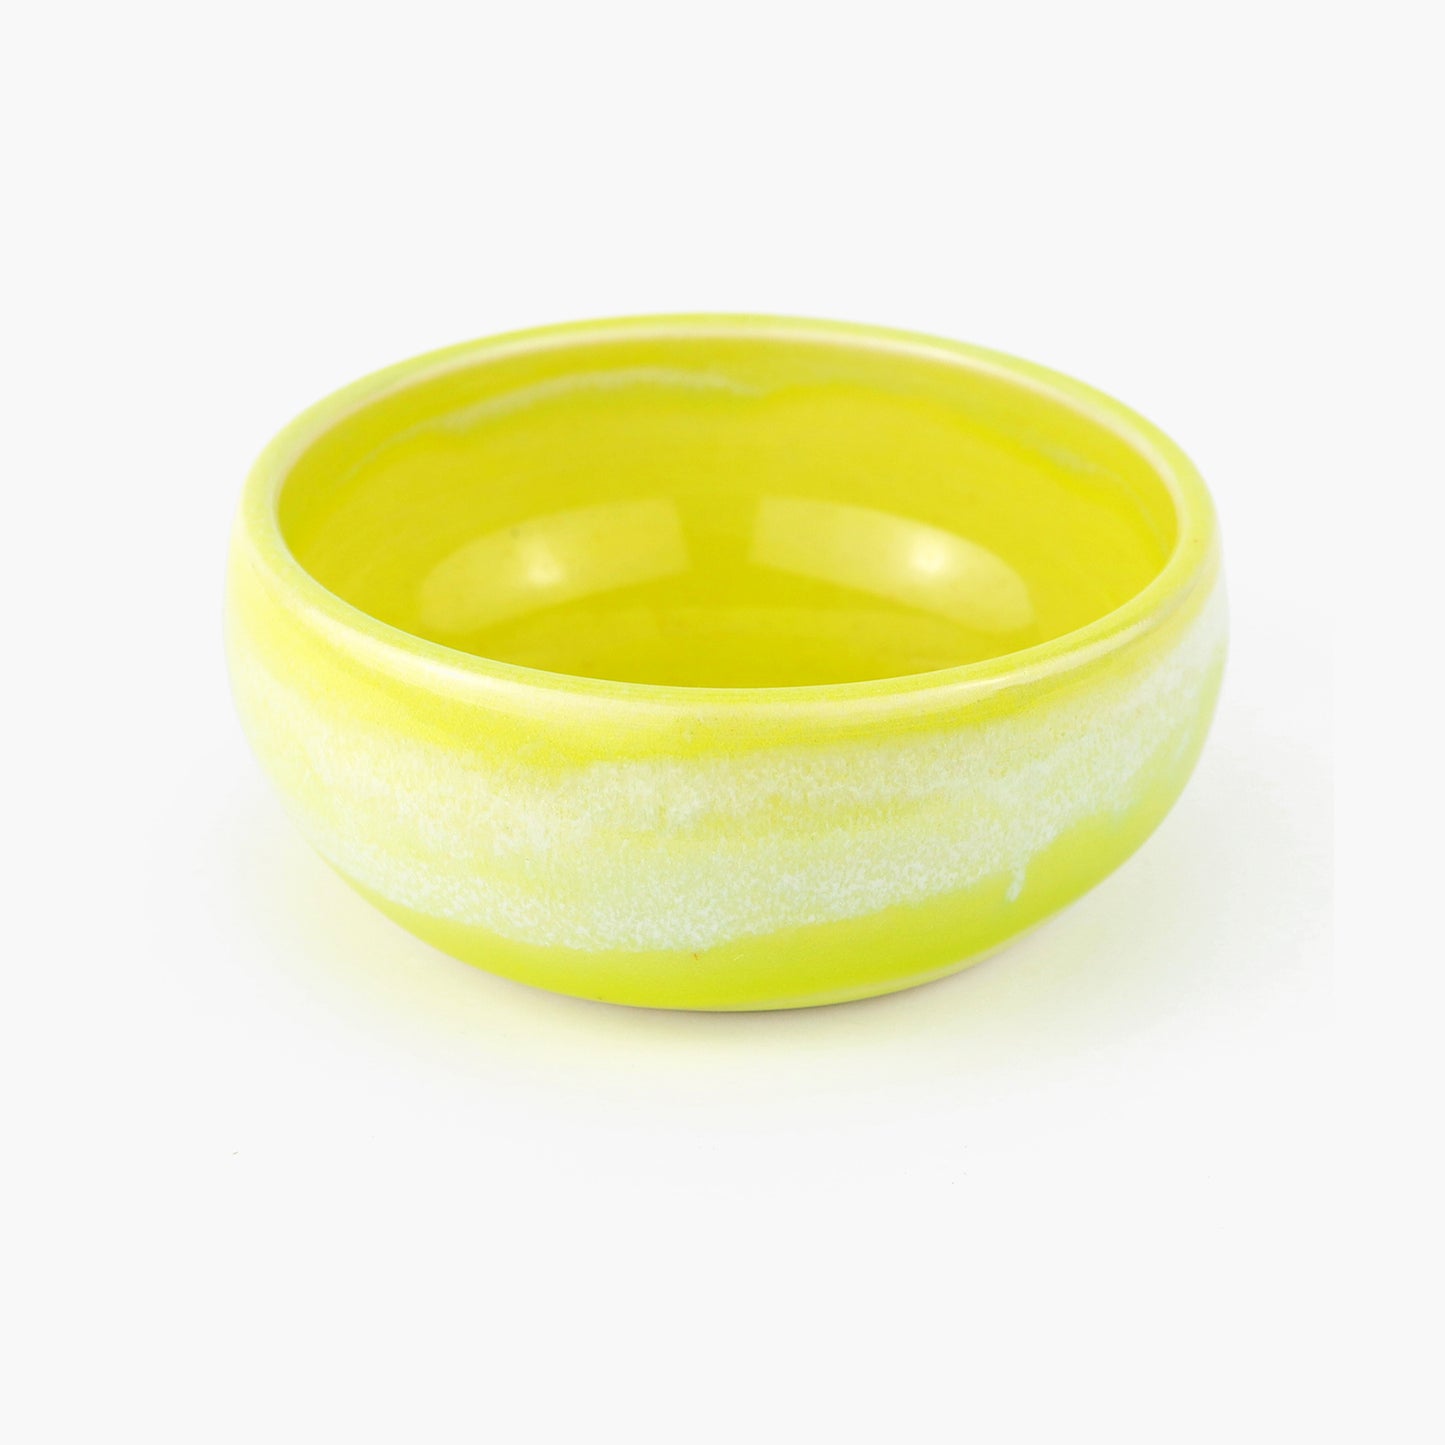 Bubble Dip Bowl in Lemon Semi-Porcelain